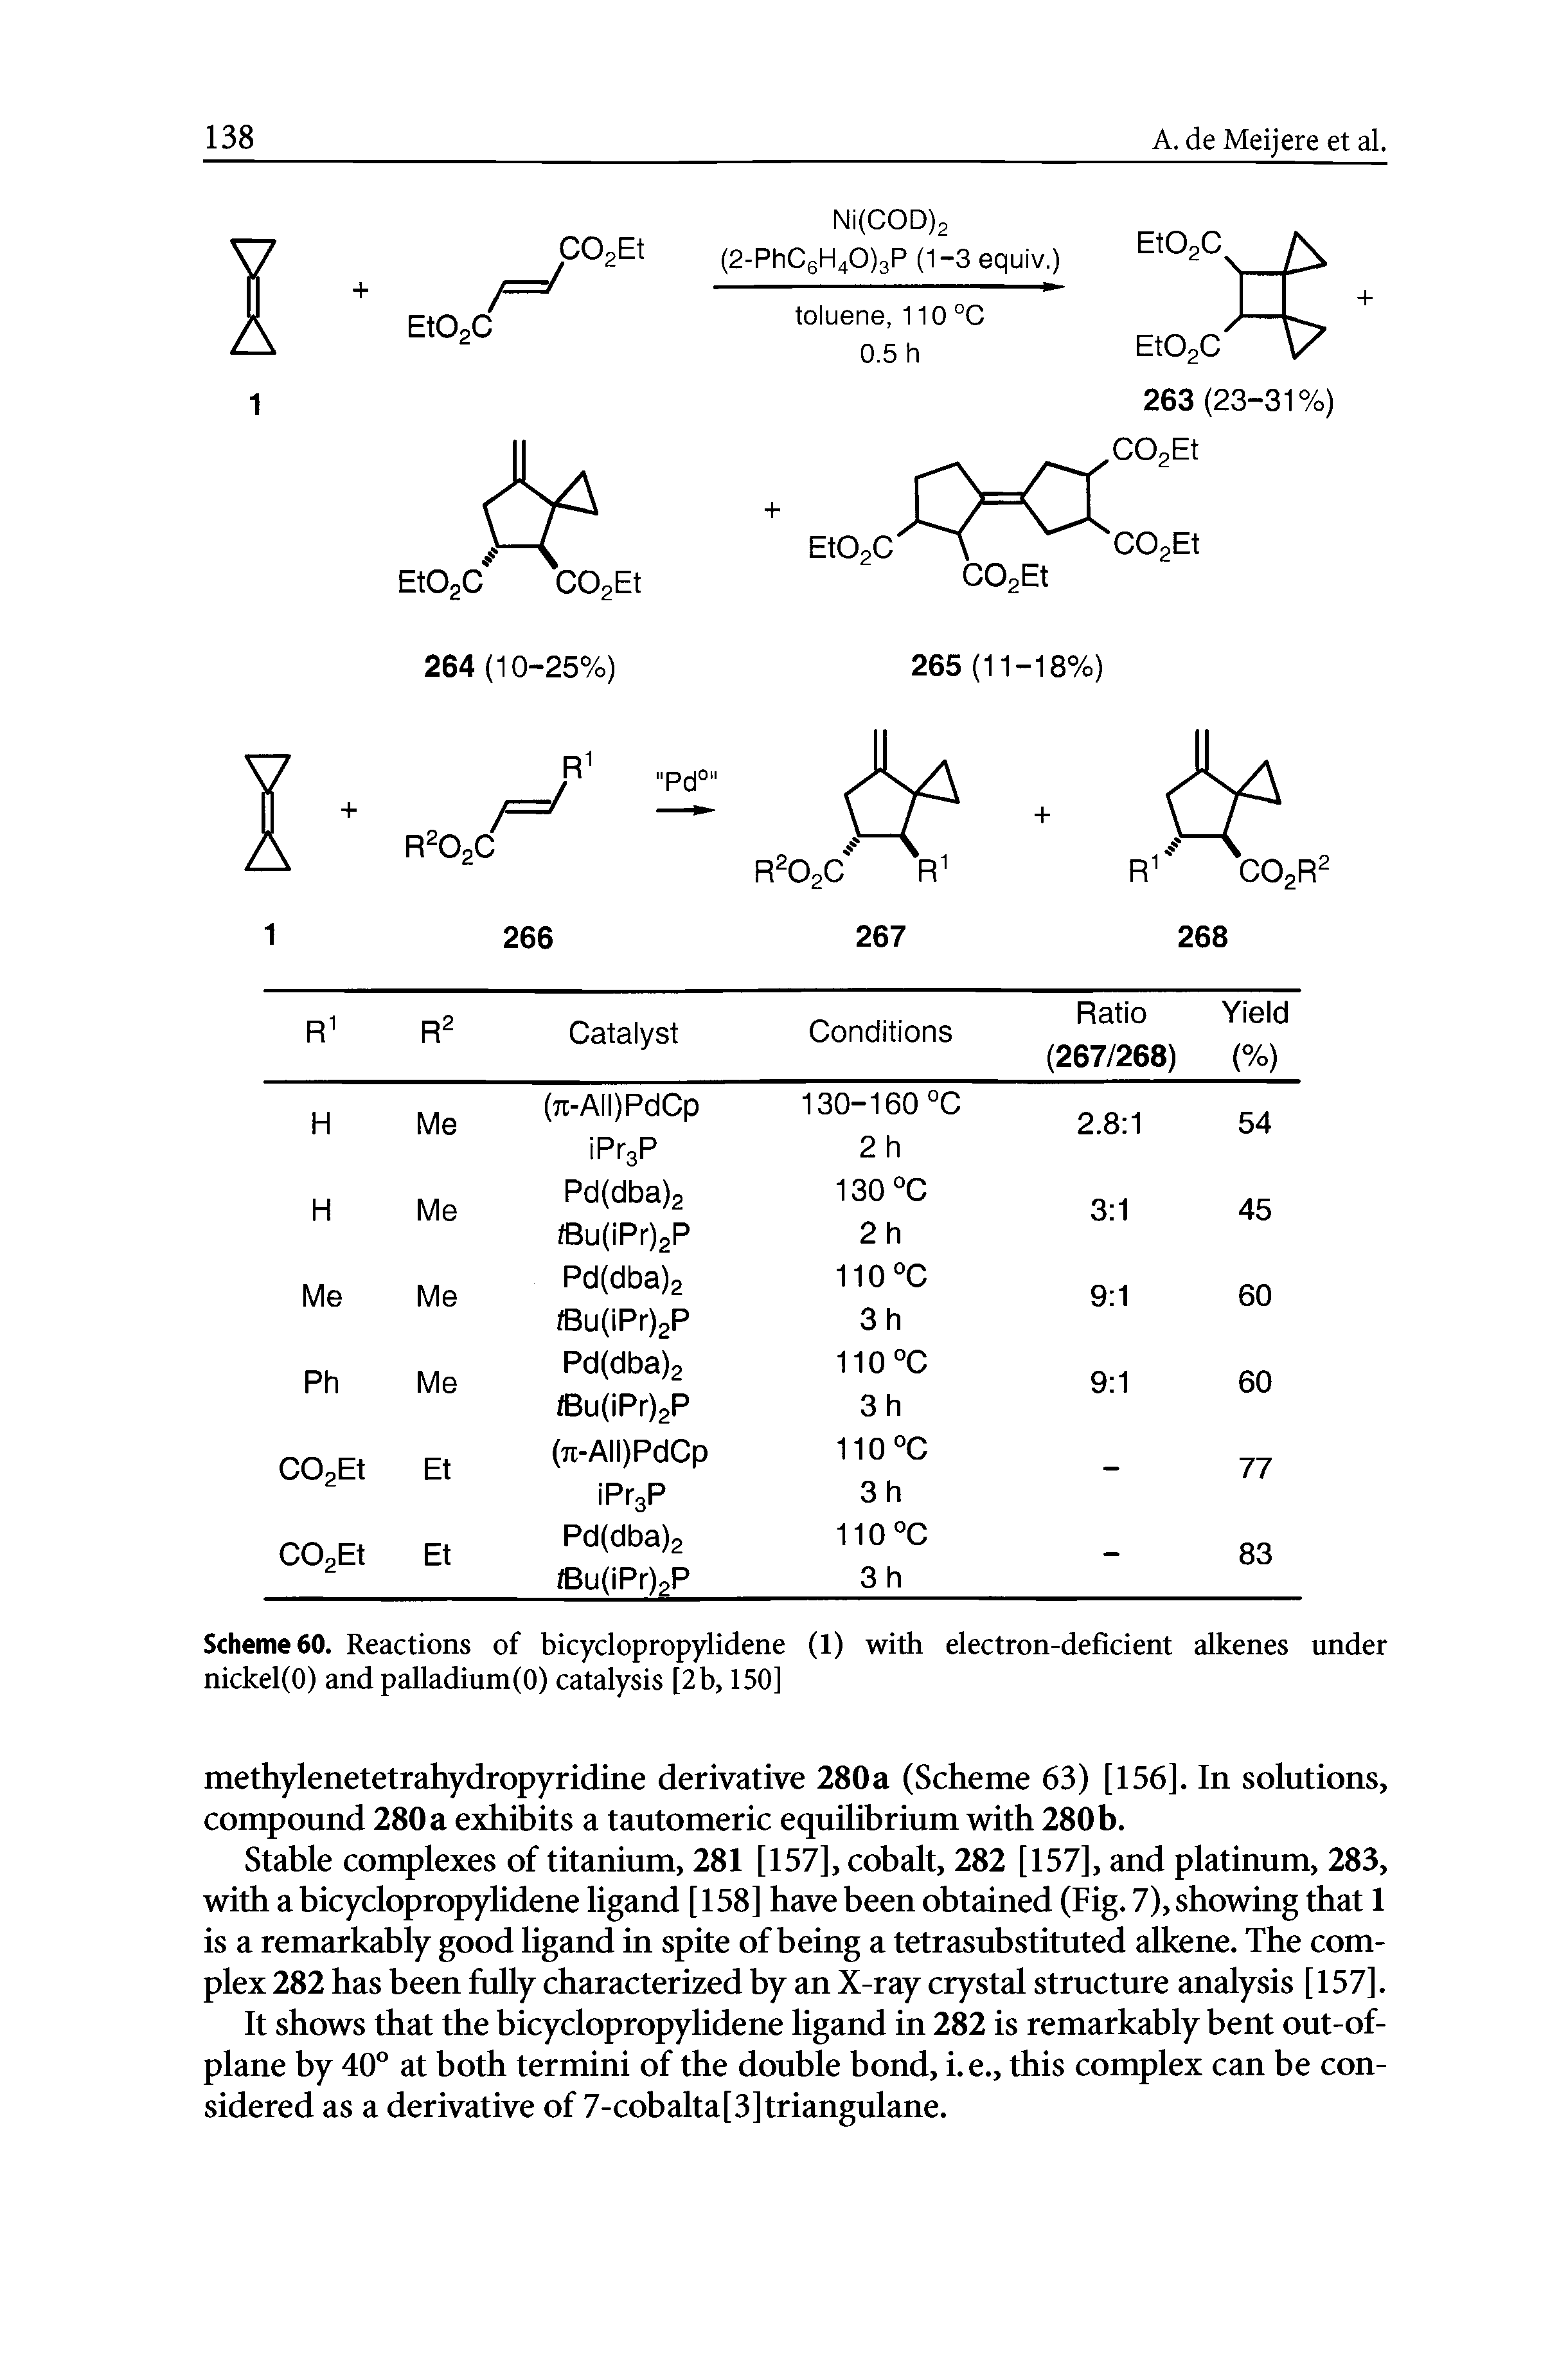 Scheme 60. Reactions of bicyclopropylidene (1) with electron-deficient alkenes under nickel(O) and palladium(O) catalysis [2b, 150]...